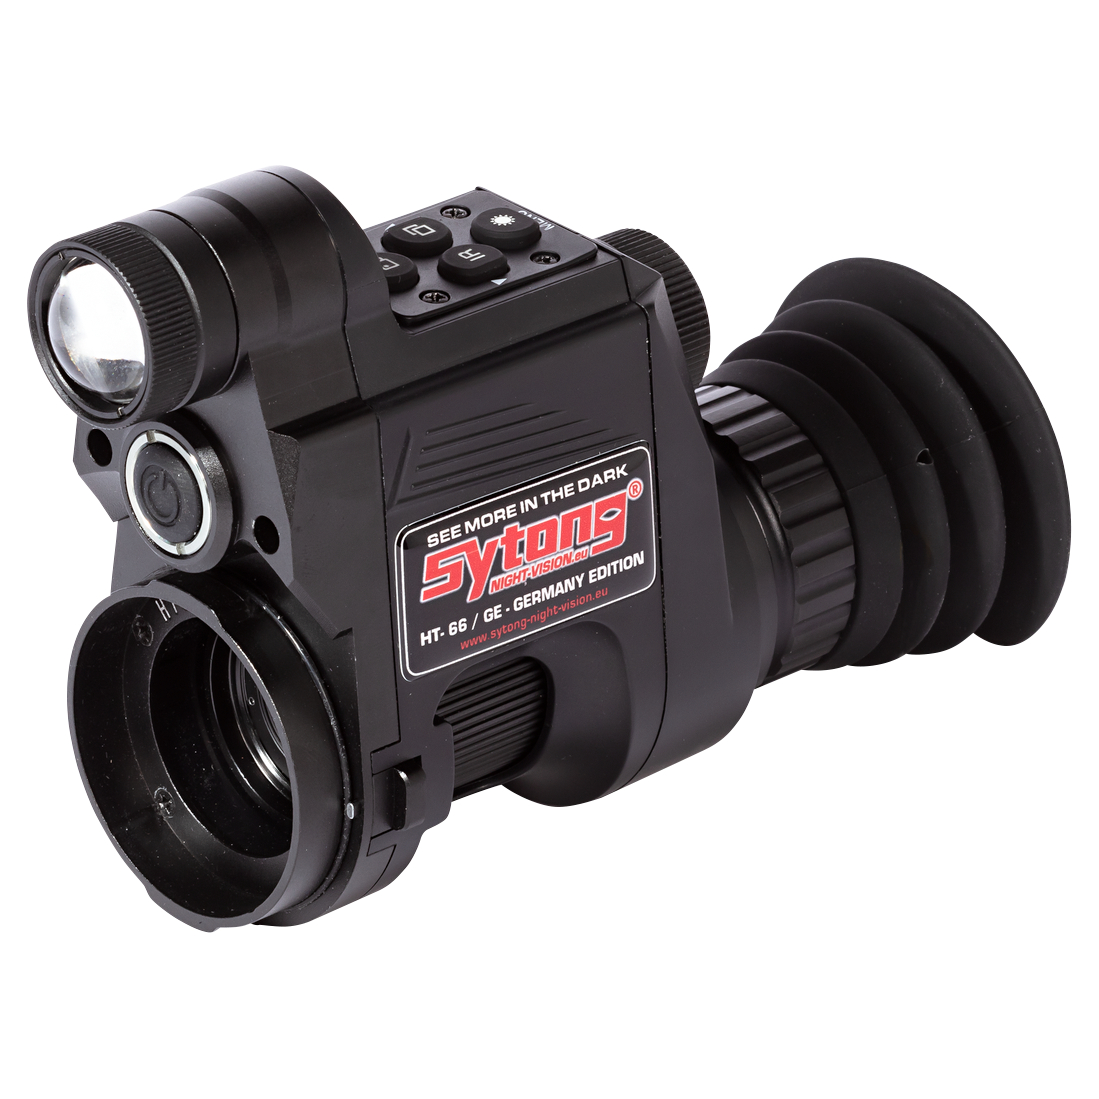 Sytong Night Vision Device HT-66 mm -NV850 low at Askari 16 | with German-Edition prices Hunting Lens Shop